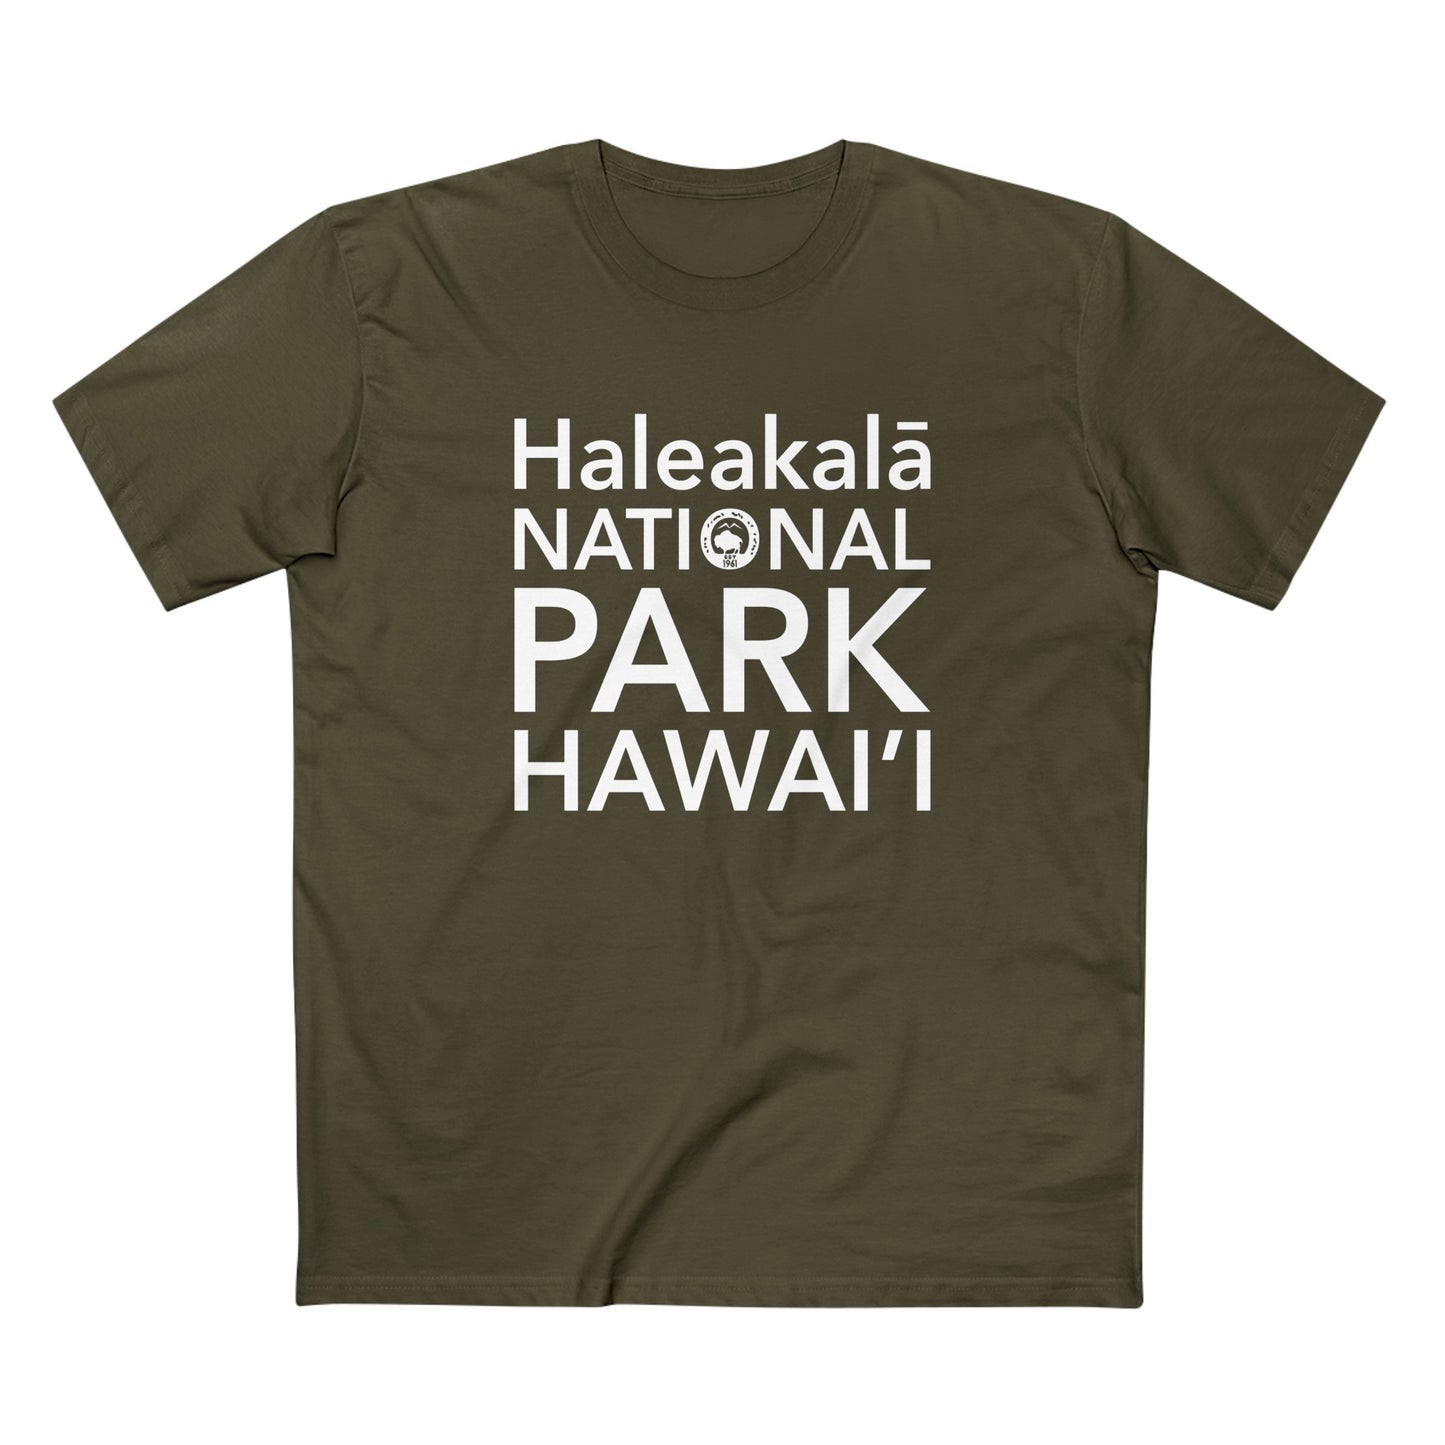 Haleakalā National Park T-Shirt Block Text